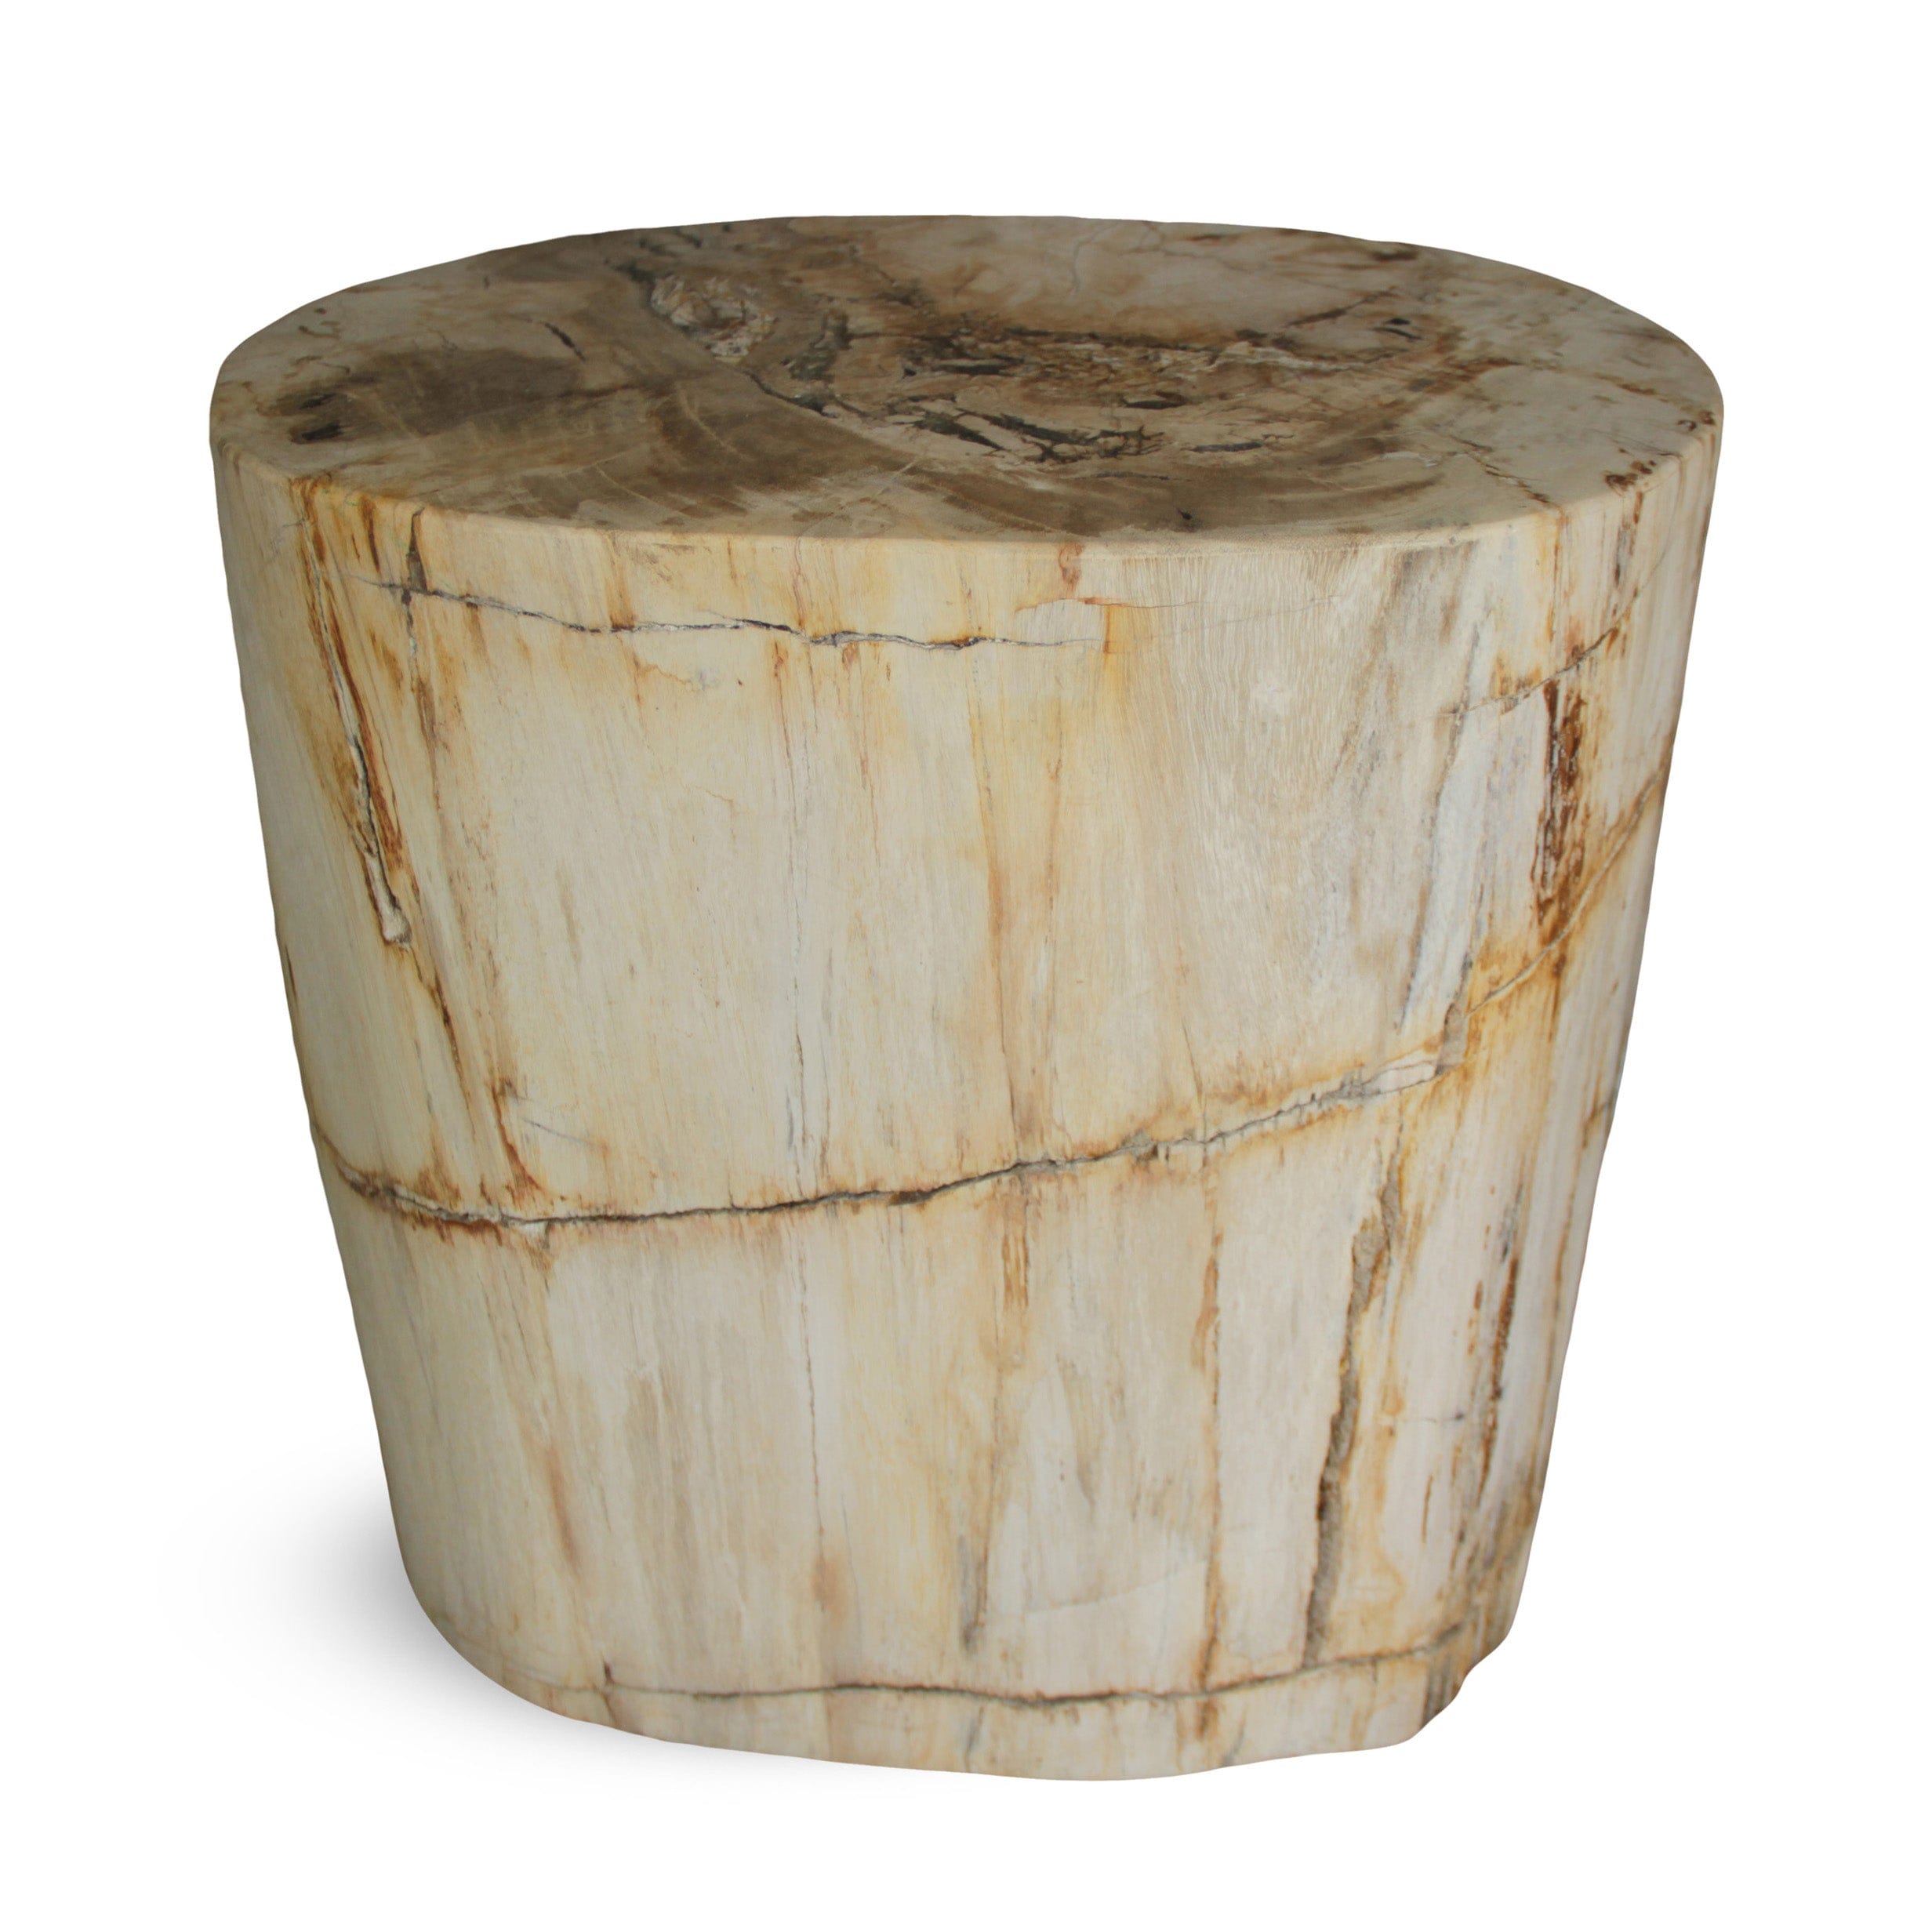 Kalifano Petrified Wood Petrified Wood Round Stump / Stool from Indonesia - 18" / 290 lbs PWS5400.003